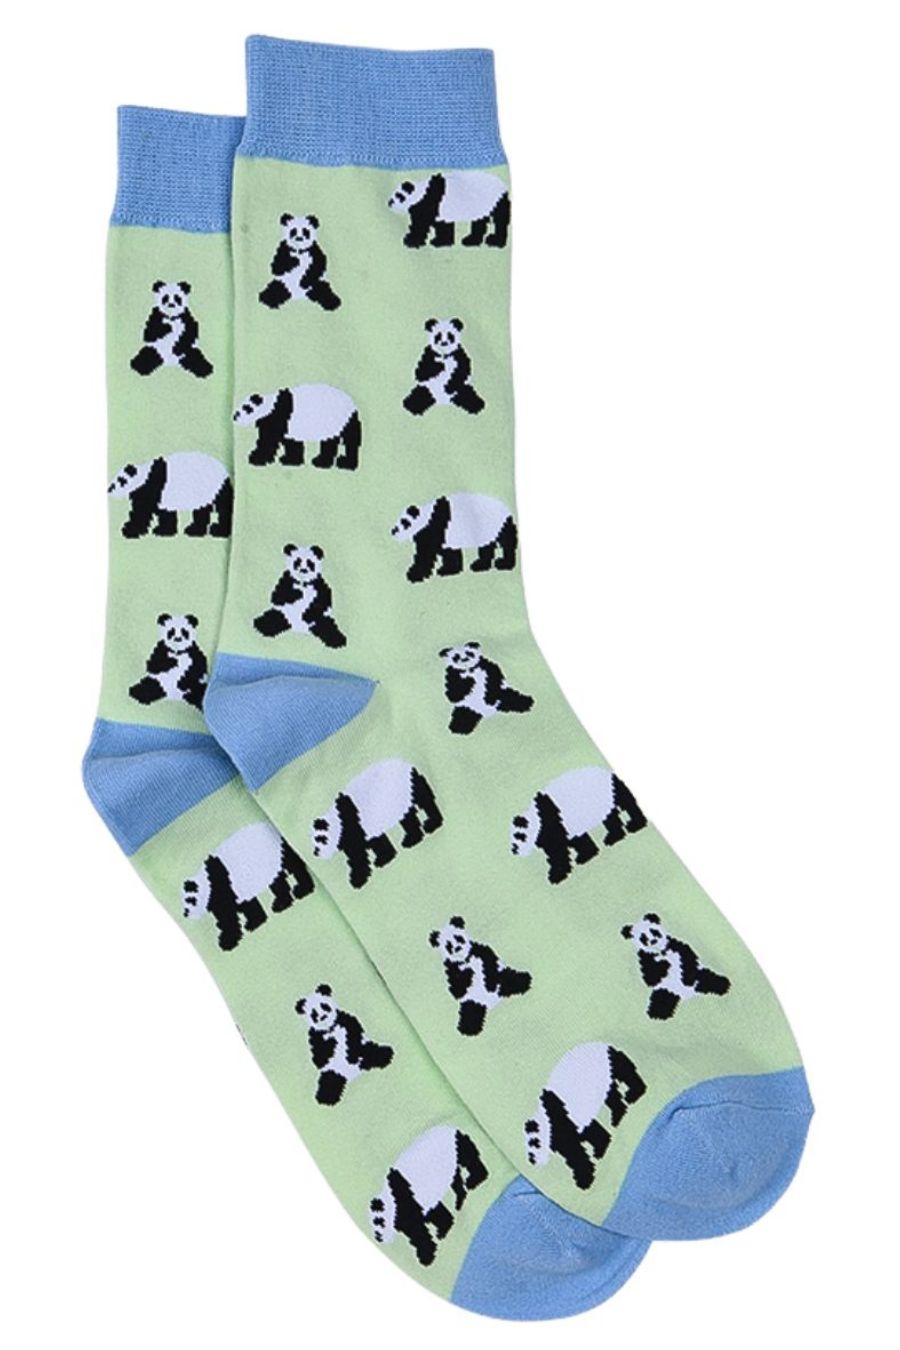 green, blue bamoo socks with pandas on them